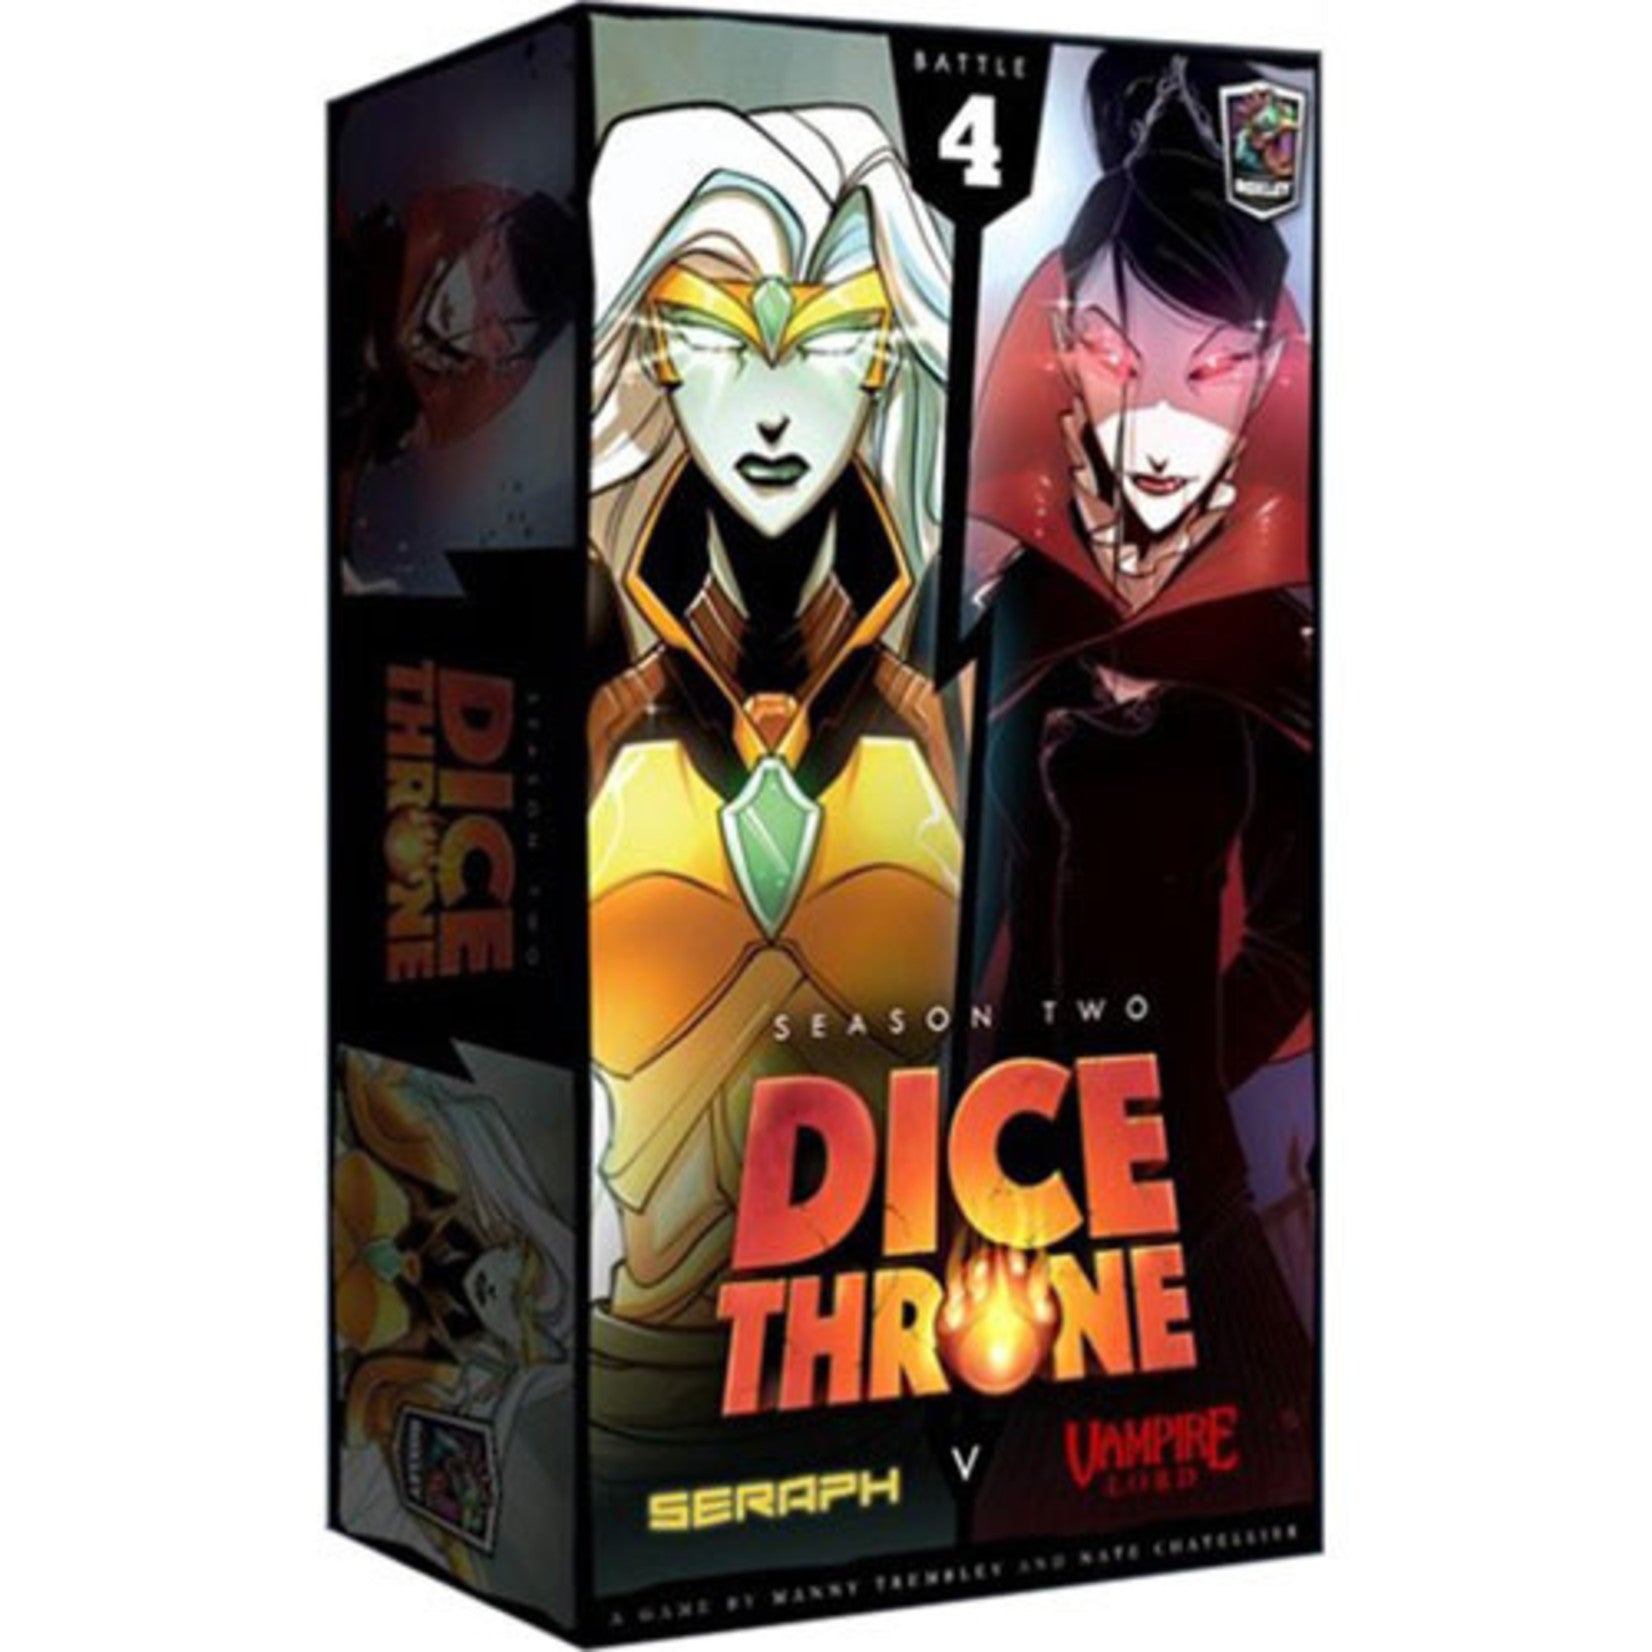 Dice Throne Season 2 Box 4 Seraph vs Vampire Lord